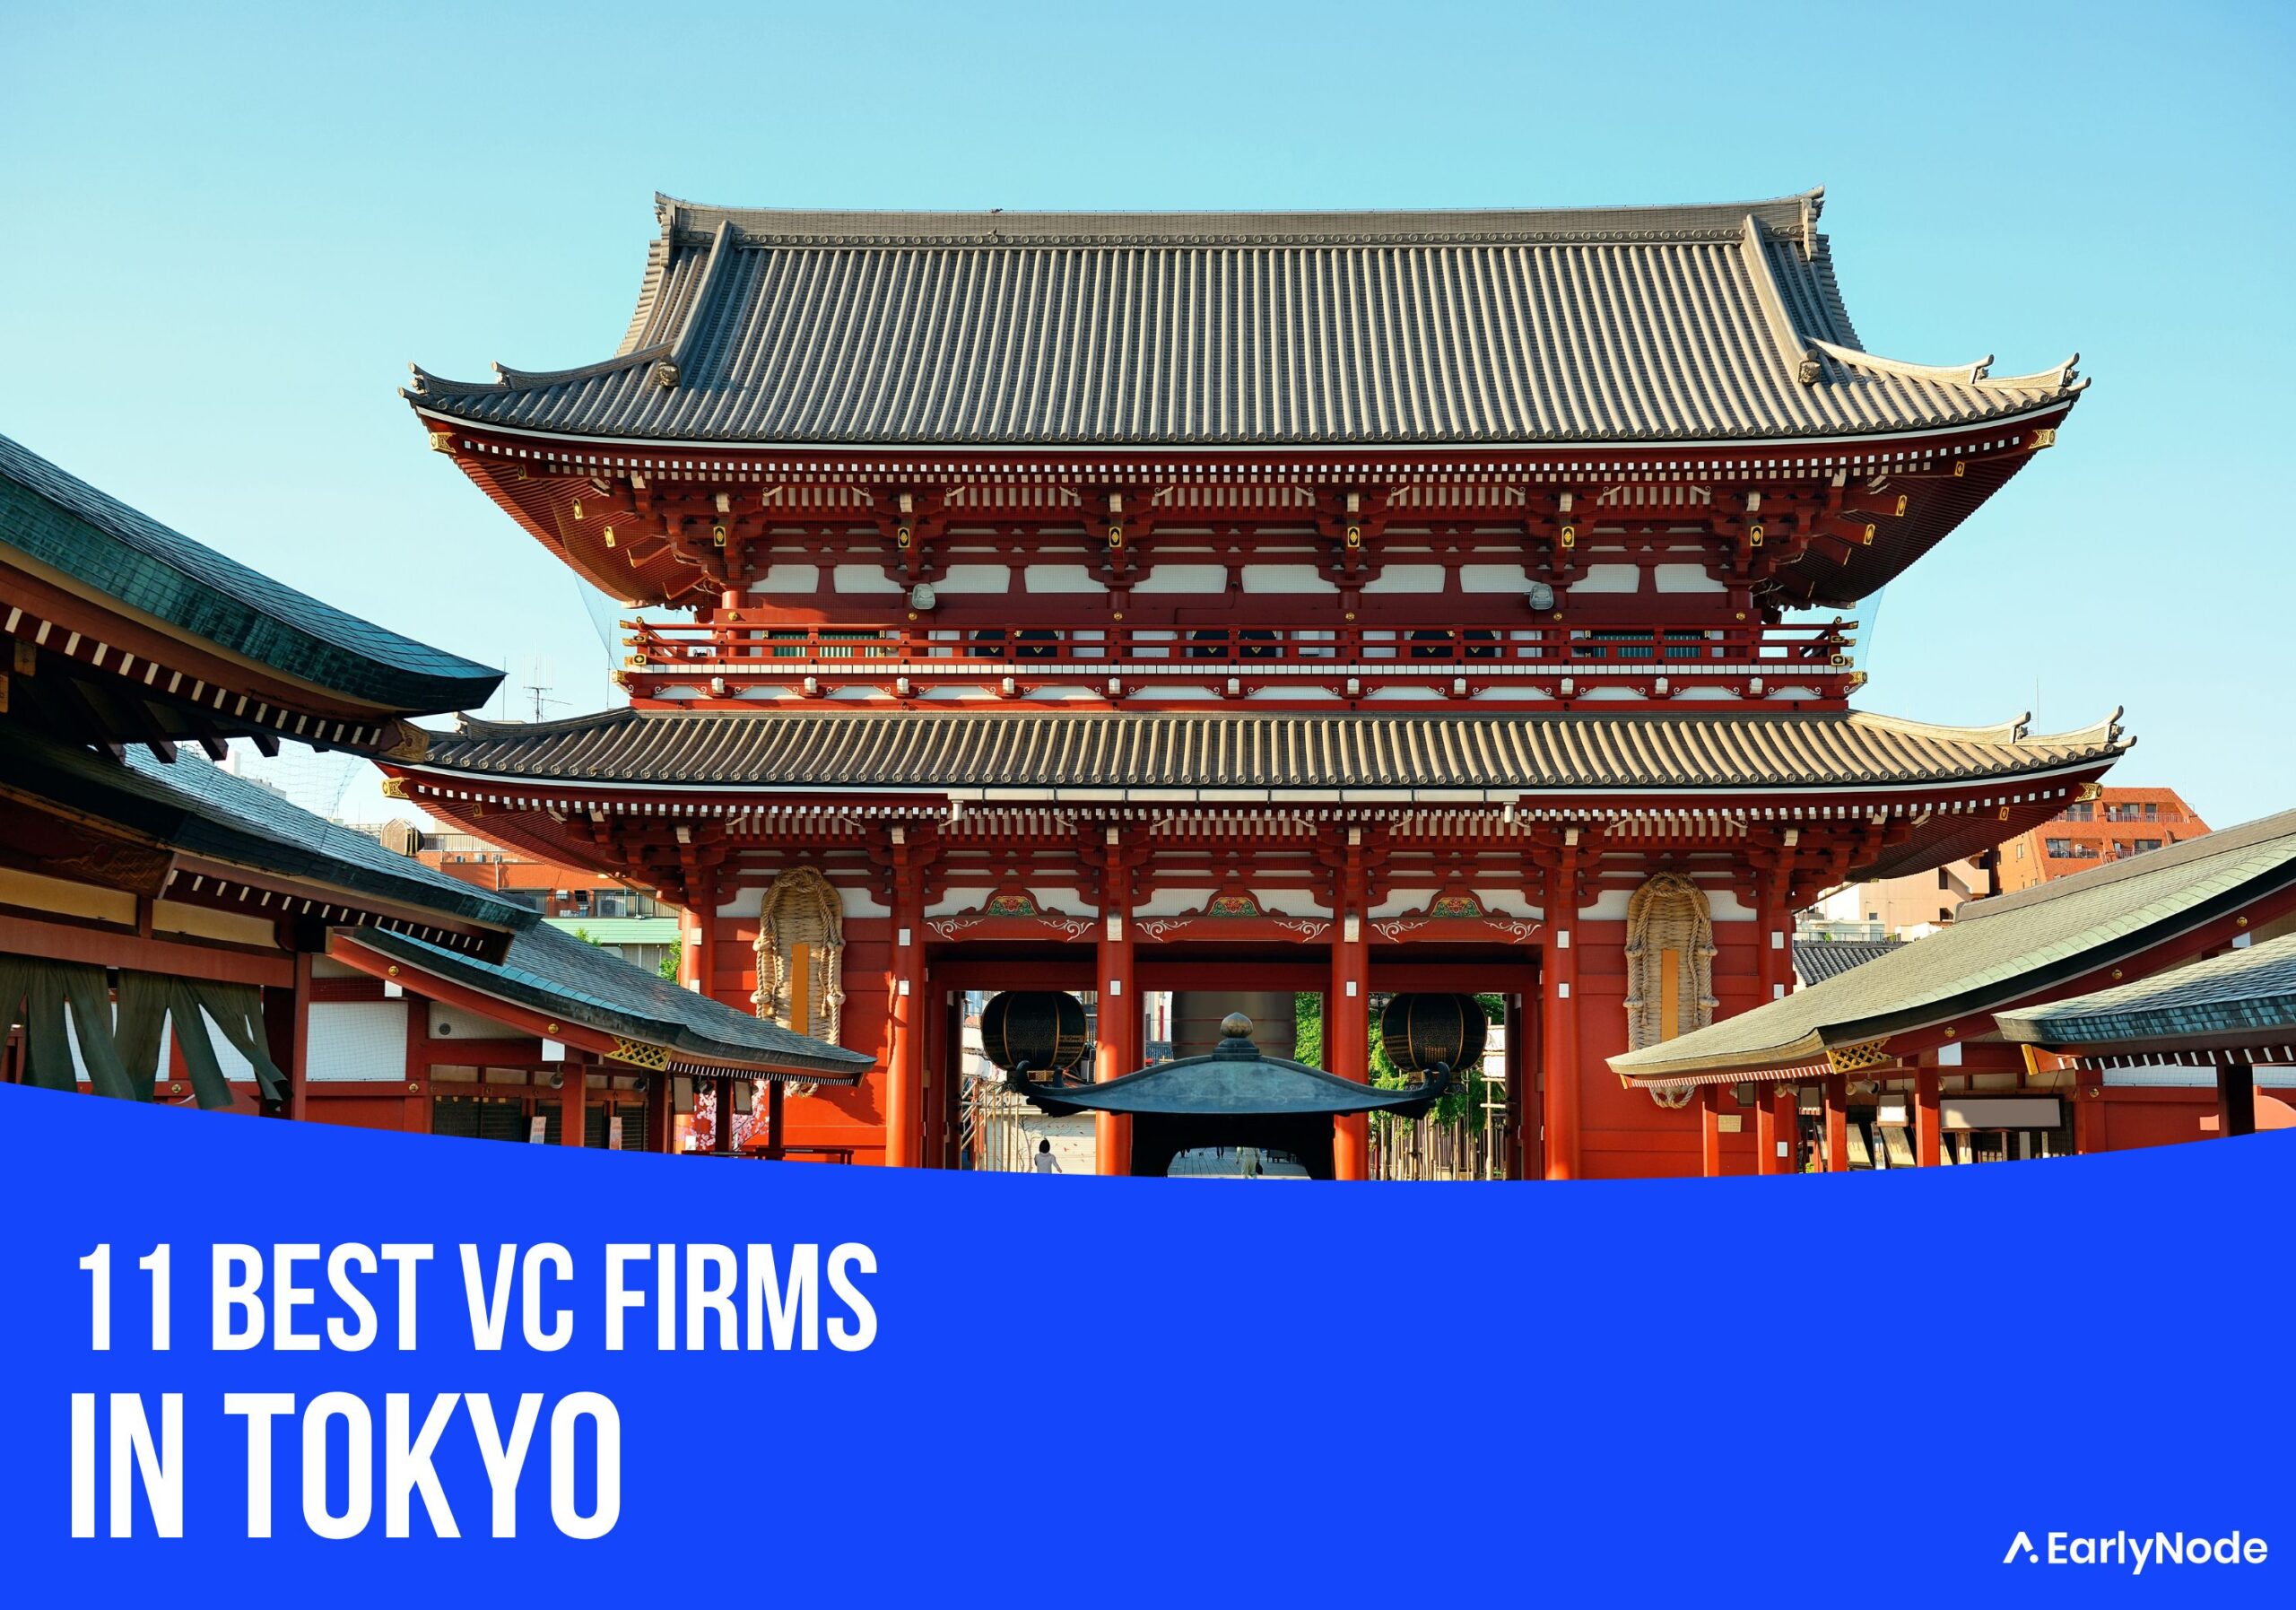 11 Best Venture Capital (VC) Firms In Tokyo